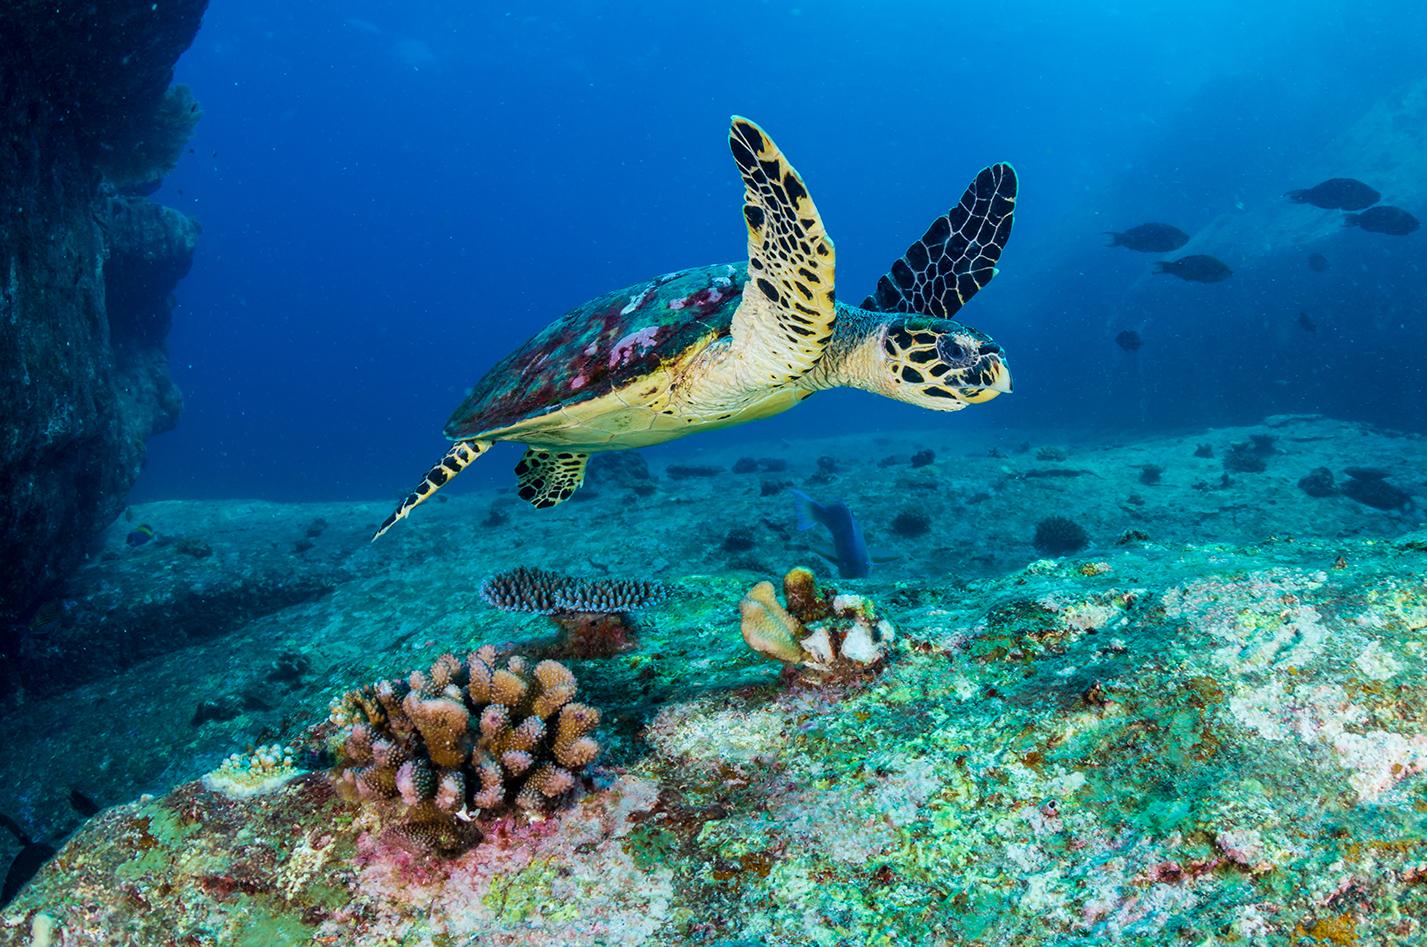 Sea turtle in the water of St. Croix, US Virgin Islands